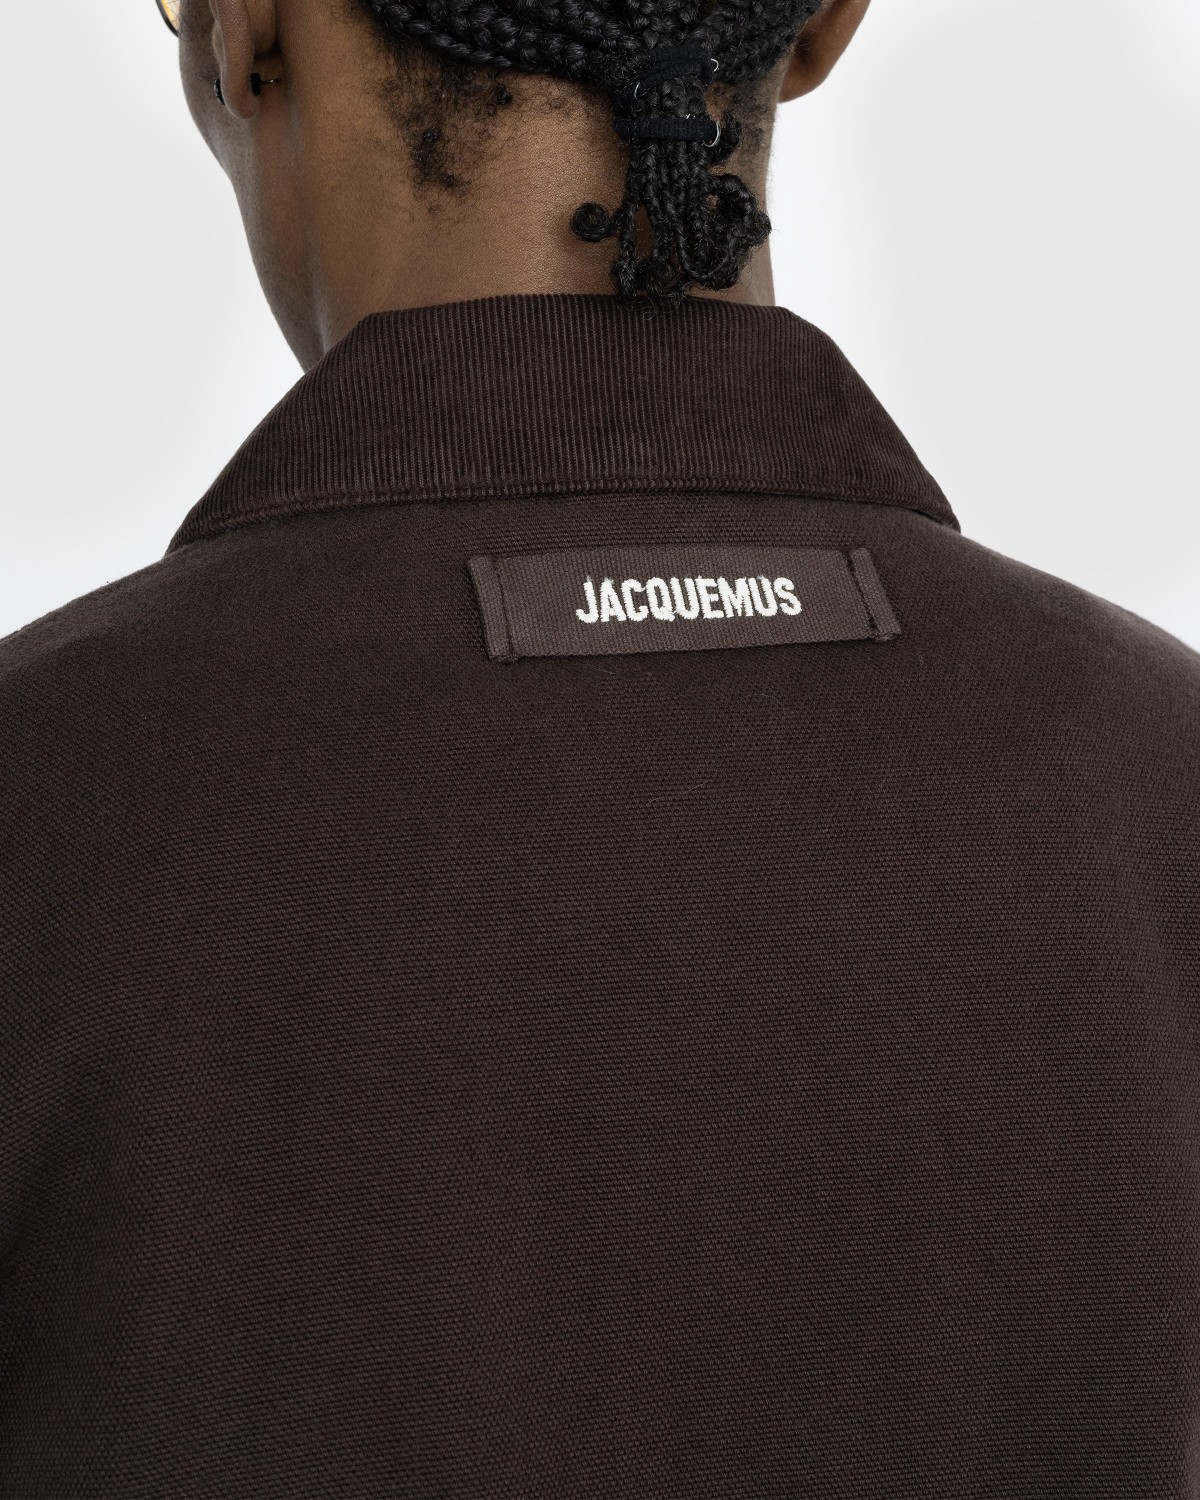 JACQUEMUS – Le Blouson Trivela Dark Brown | Highsnobiety Shop